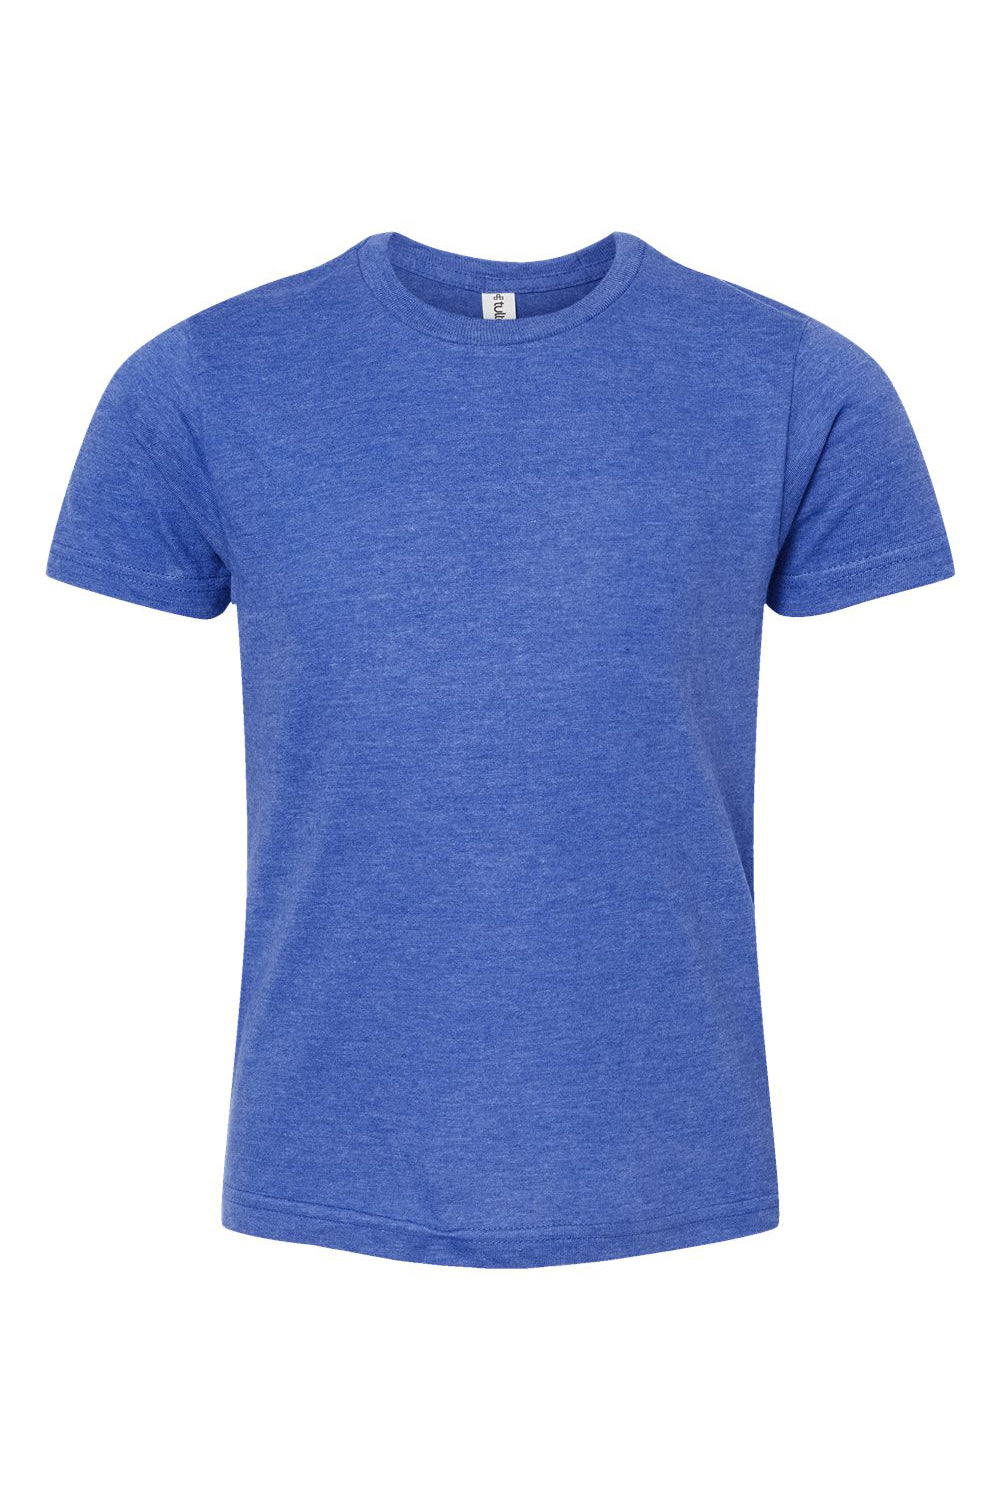 Tultex 235 Youth Fine Jersey Short Sleeve Crewneck T-Shirt Heather Royal Blue Flat Front